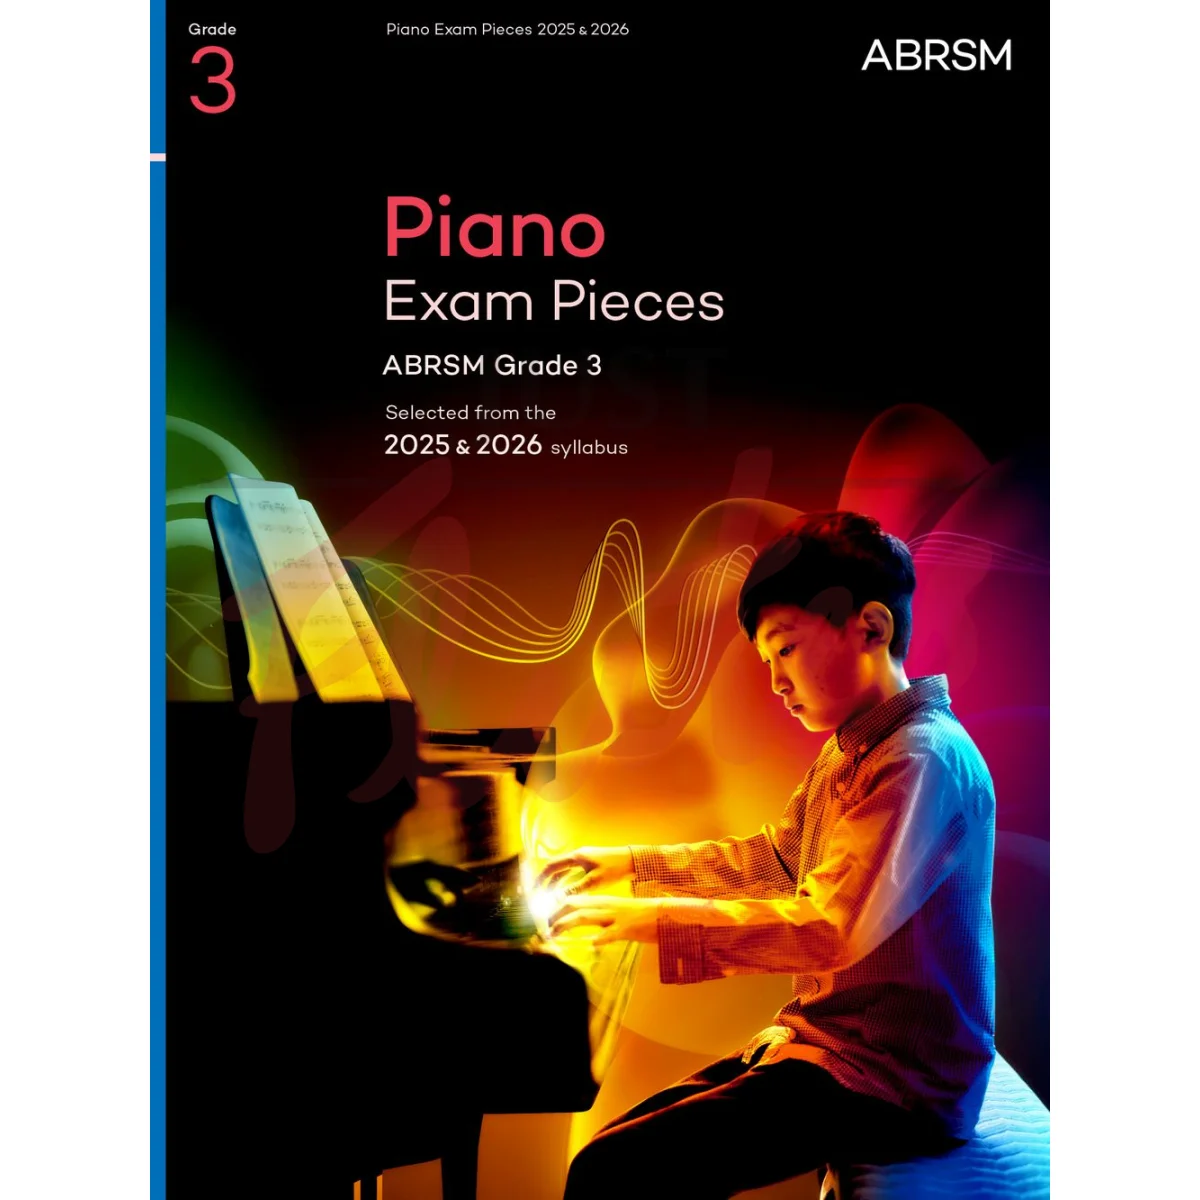 Piano Exam Pieces 2025-26, Grade 3